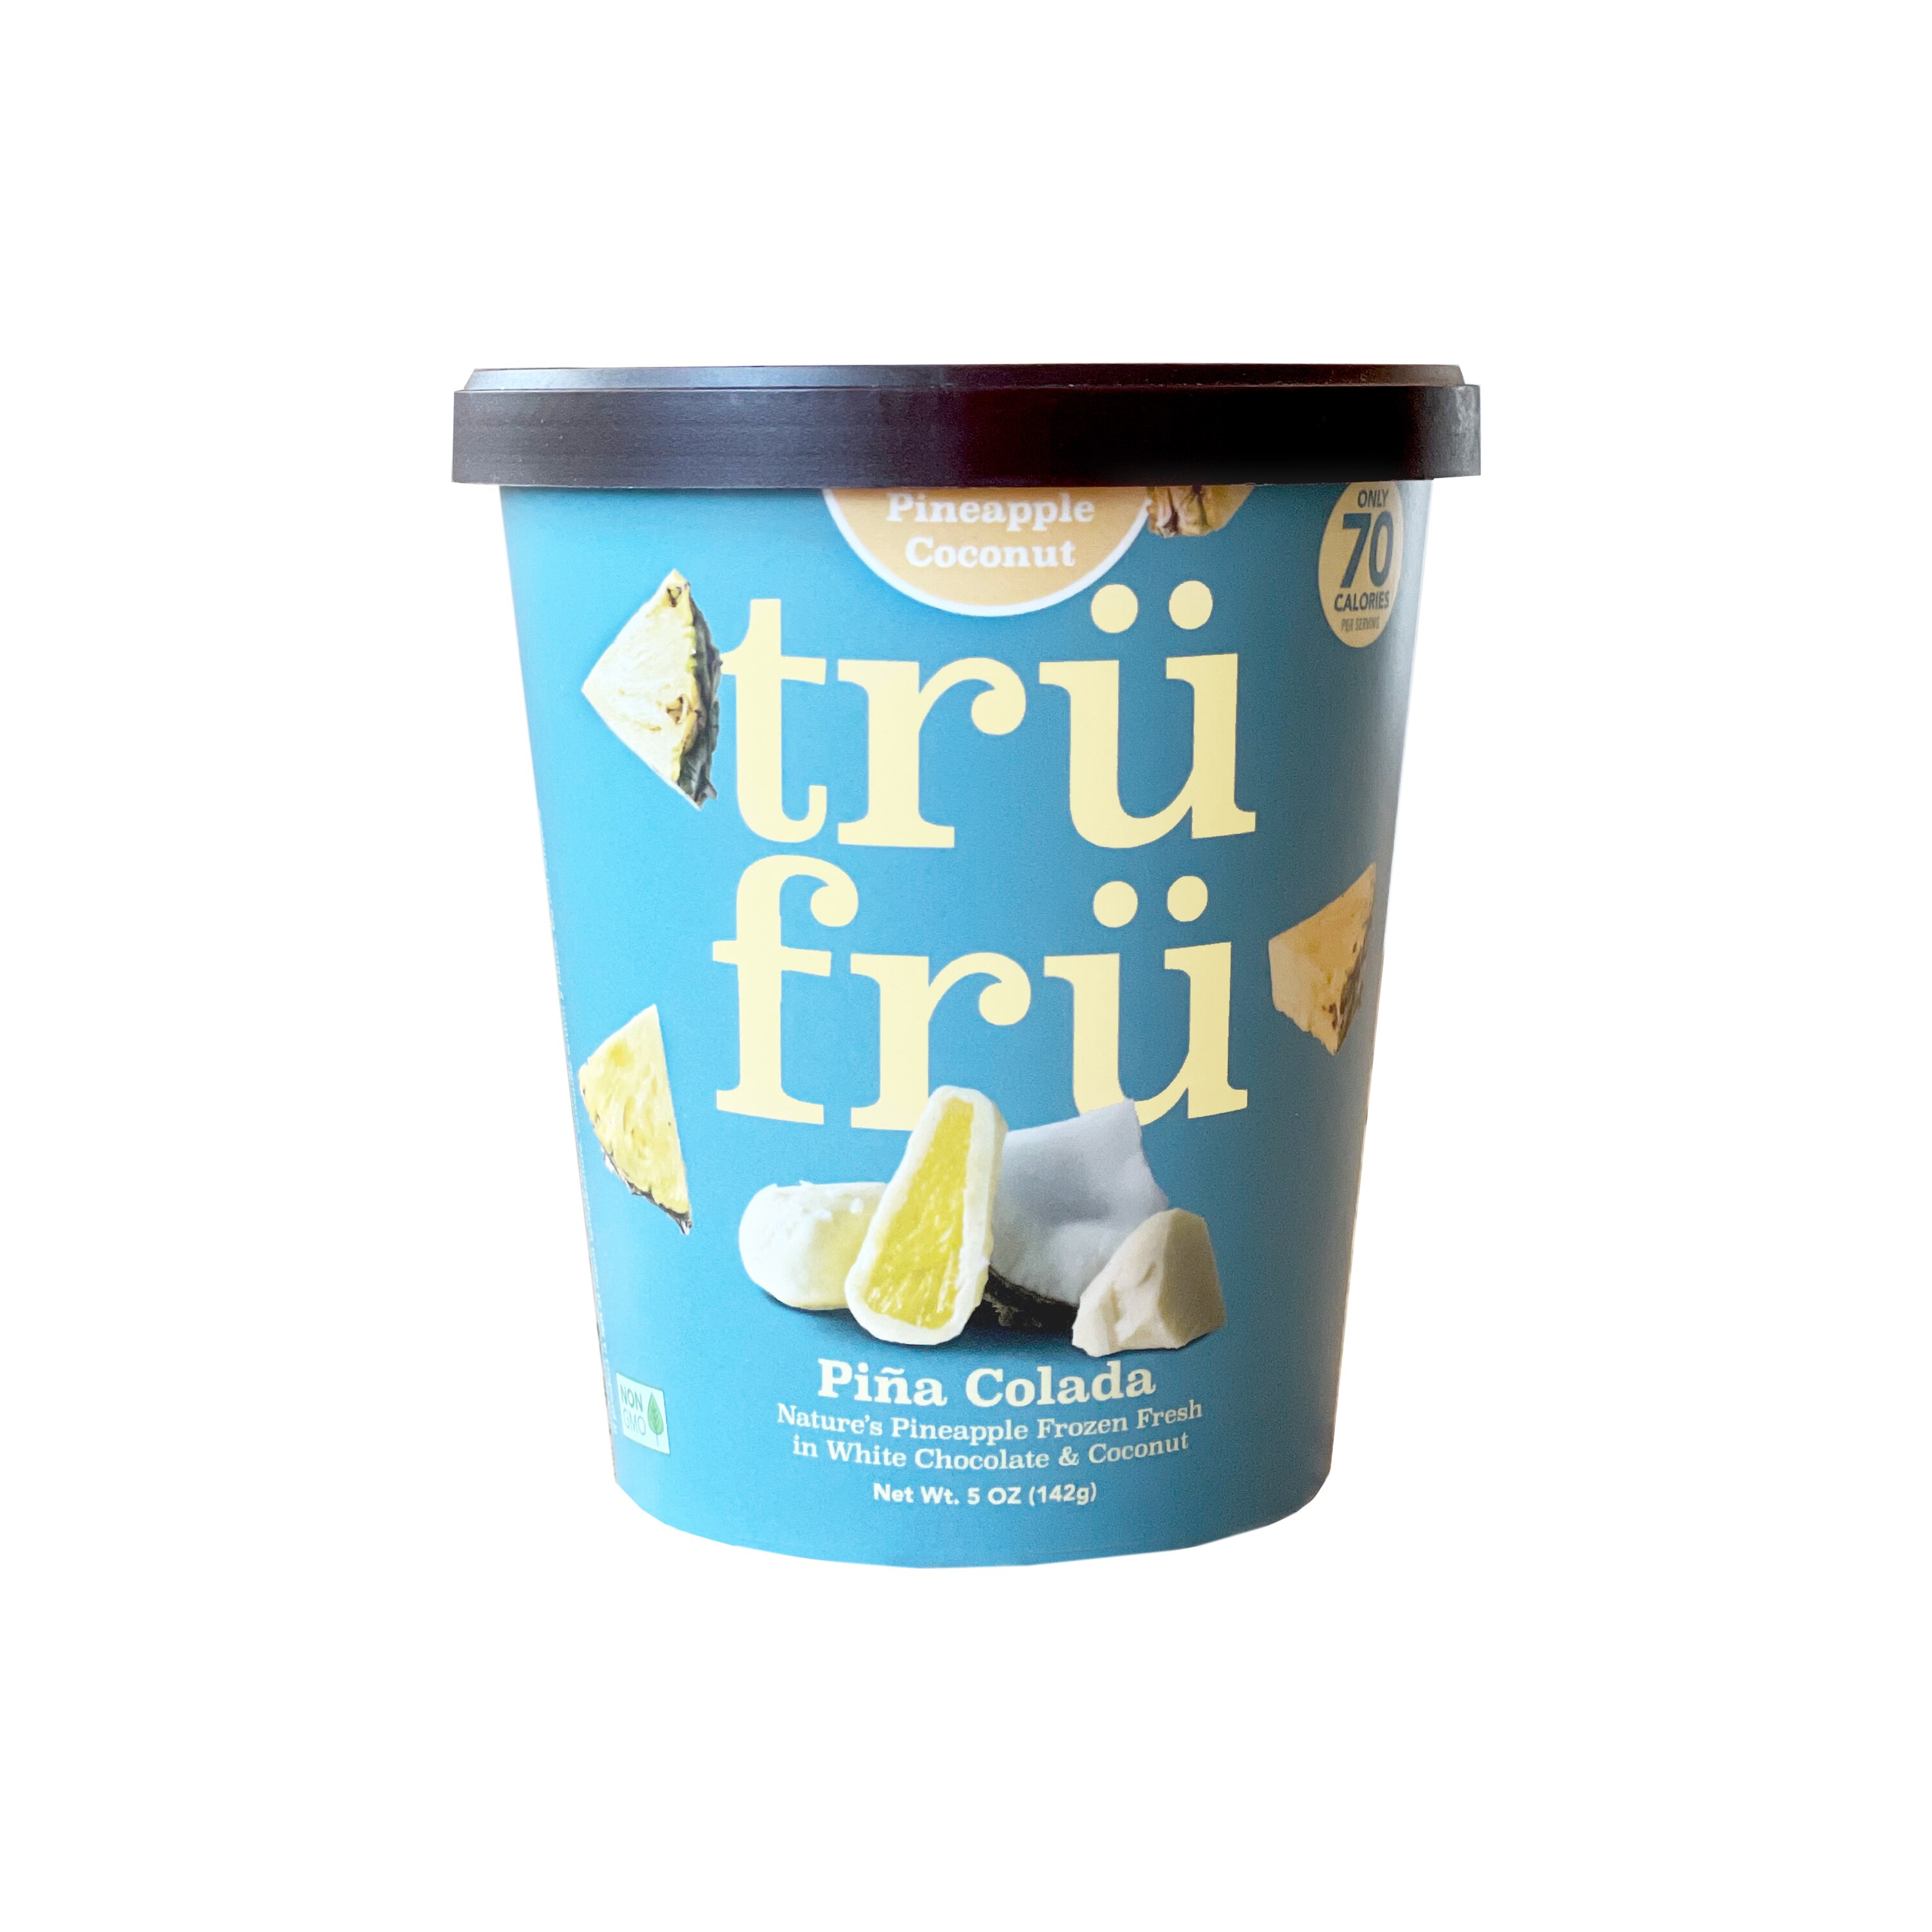 TRU FRU Pineapple Hyper Chilled in White Chocolate & Coconut, 5 oz